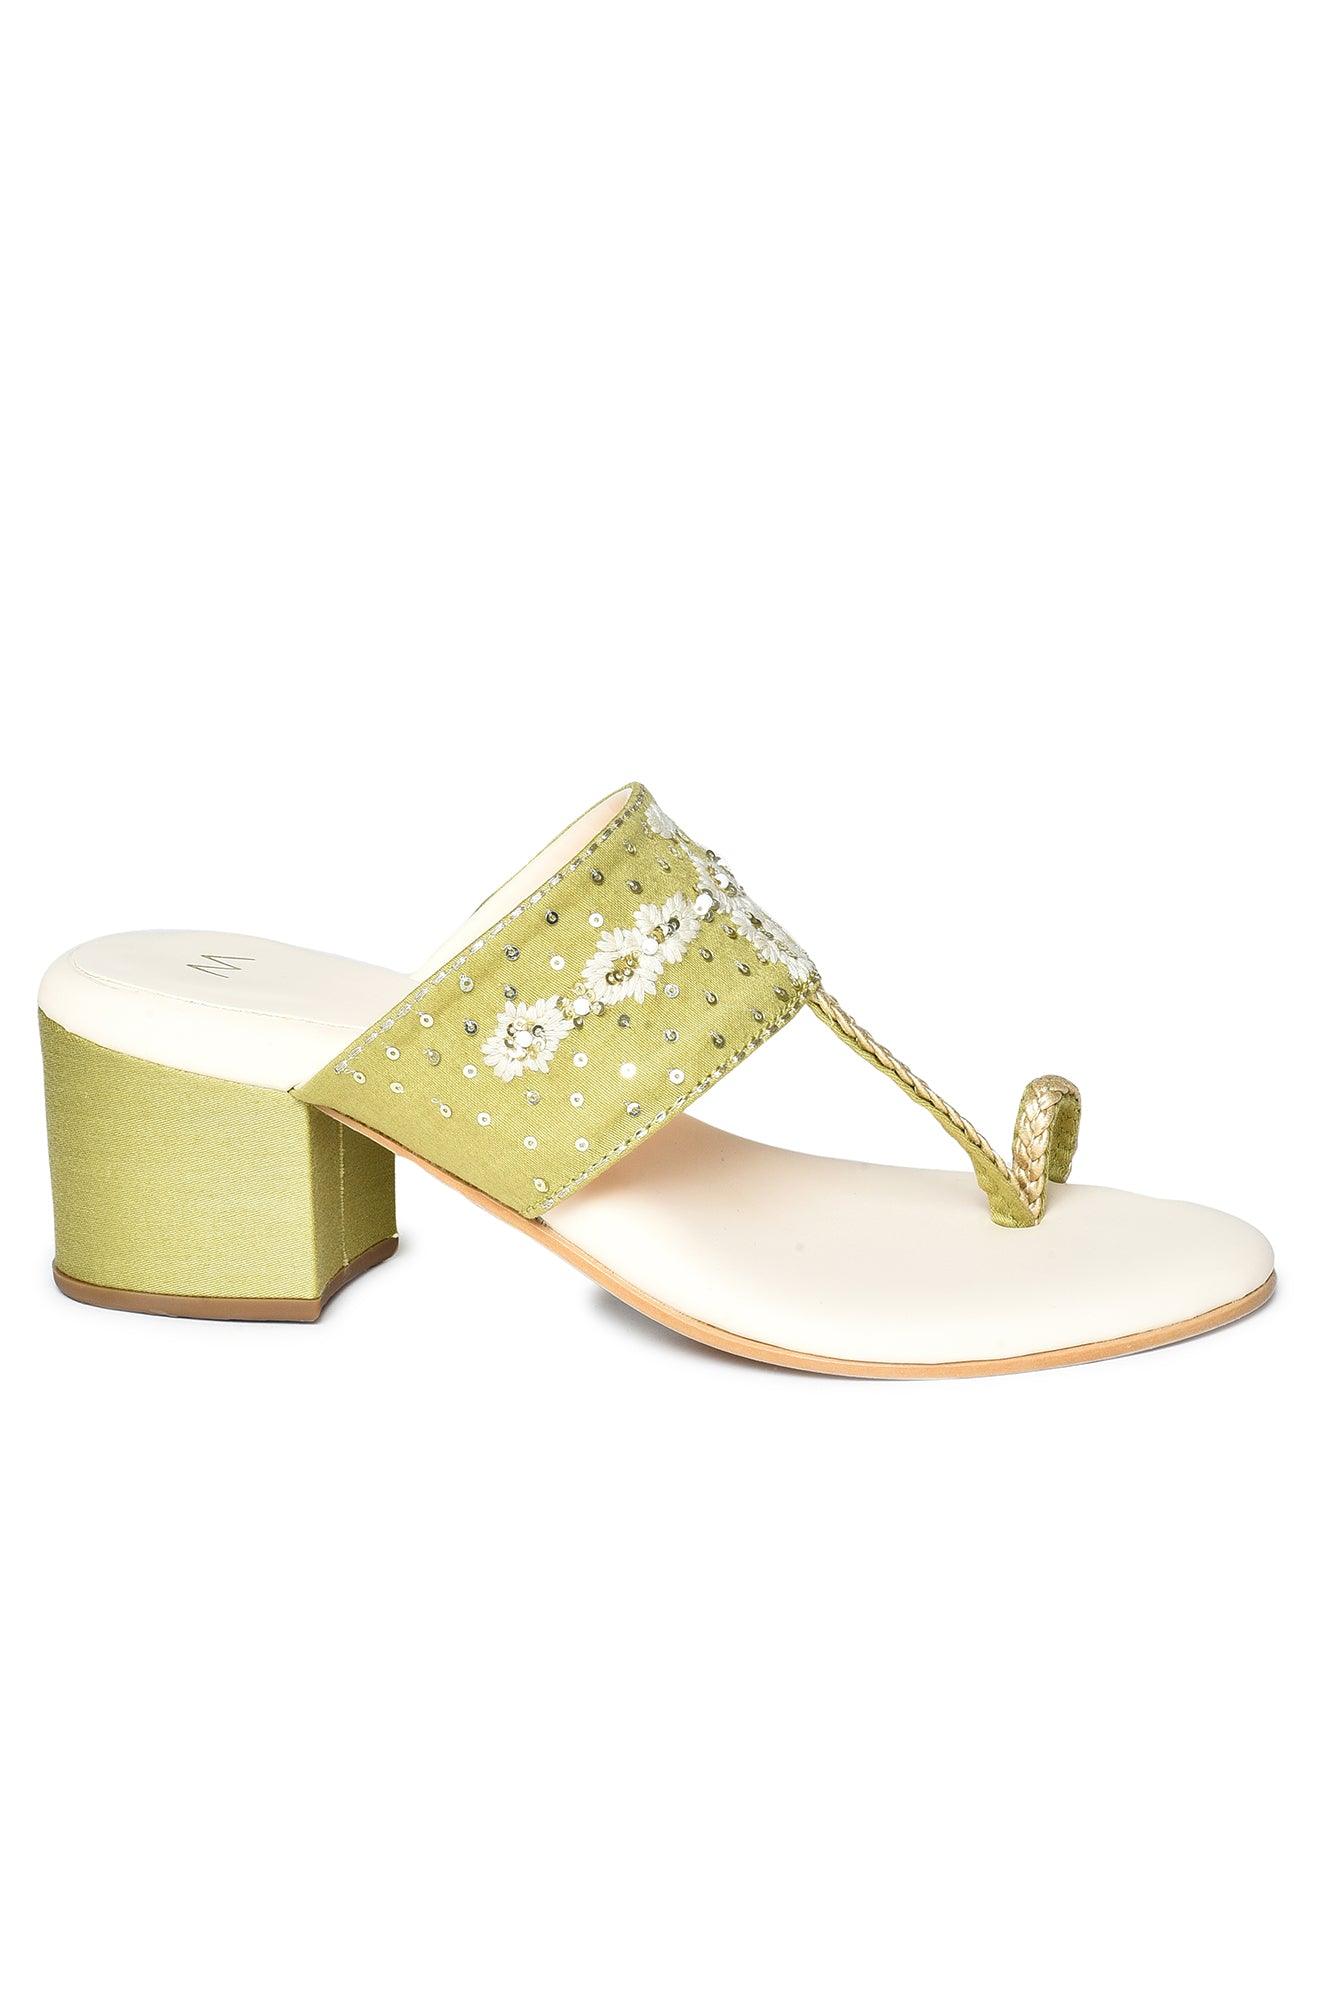 W Embroidered Green Almond Toe Block Heel - wforwoman